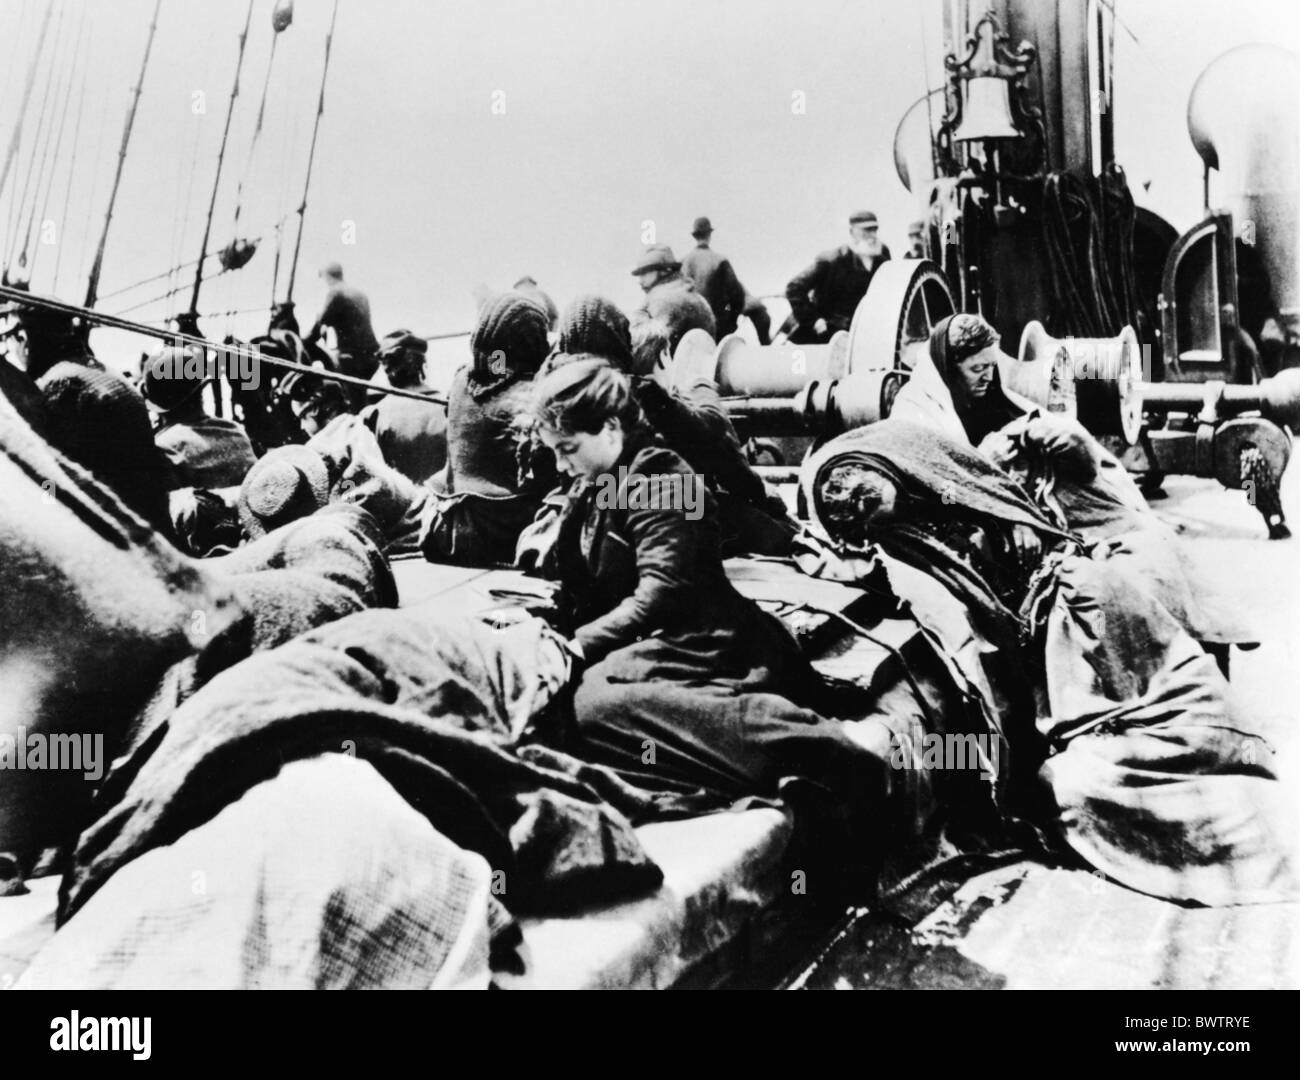 Emigrants emigration USA America United States North America passenger ship Deck New York ca. 1910 familiy Stock Photo